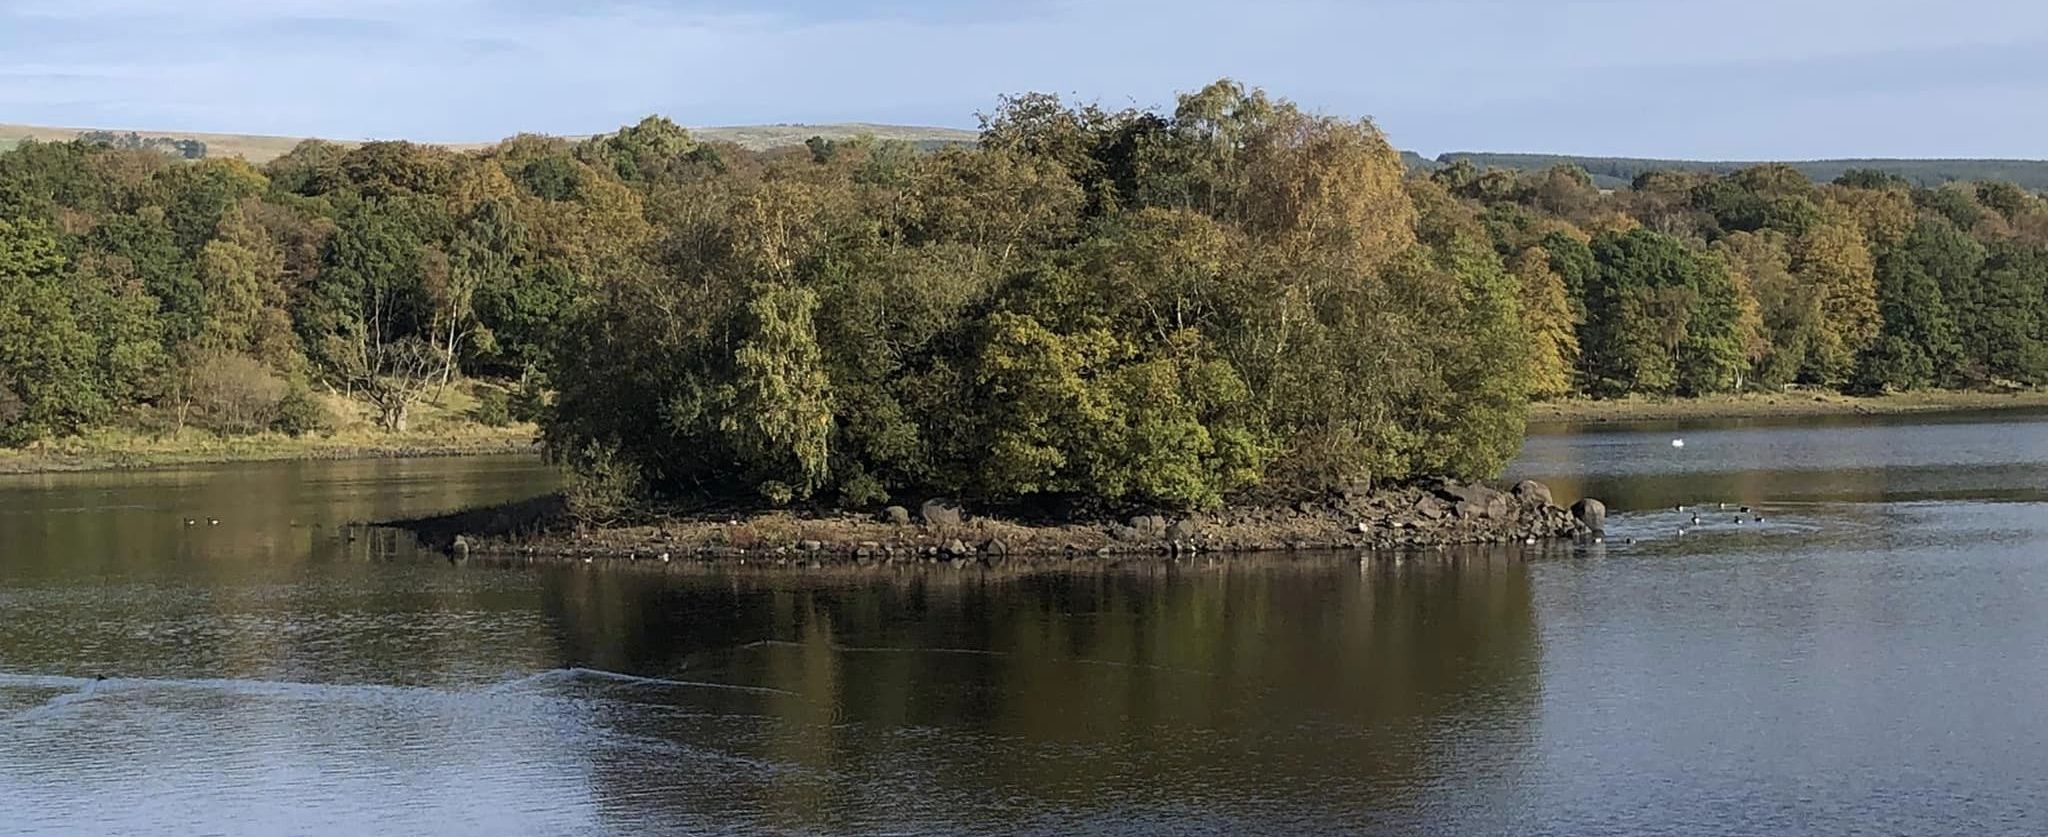 Speirs Island in Banton Loch